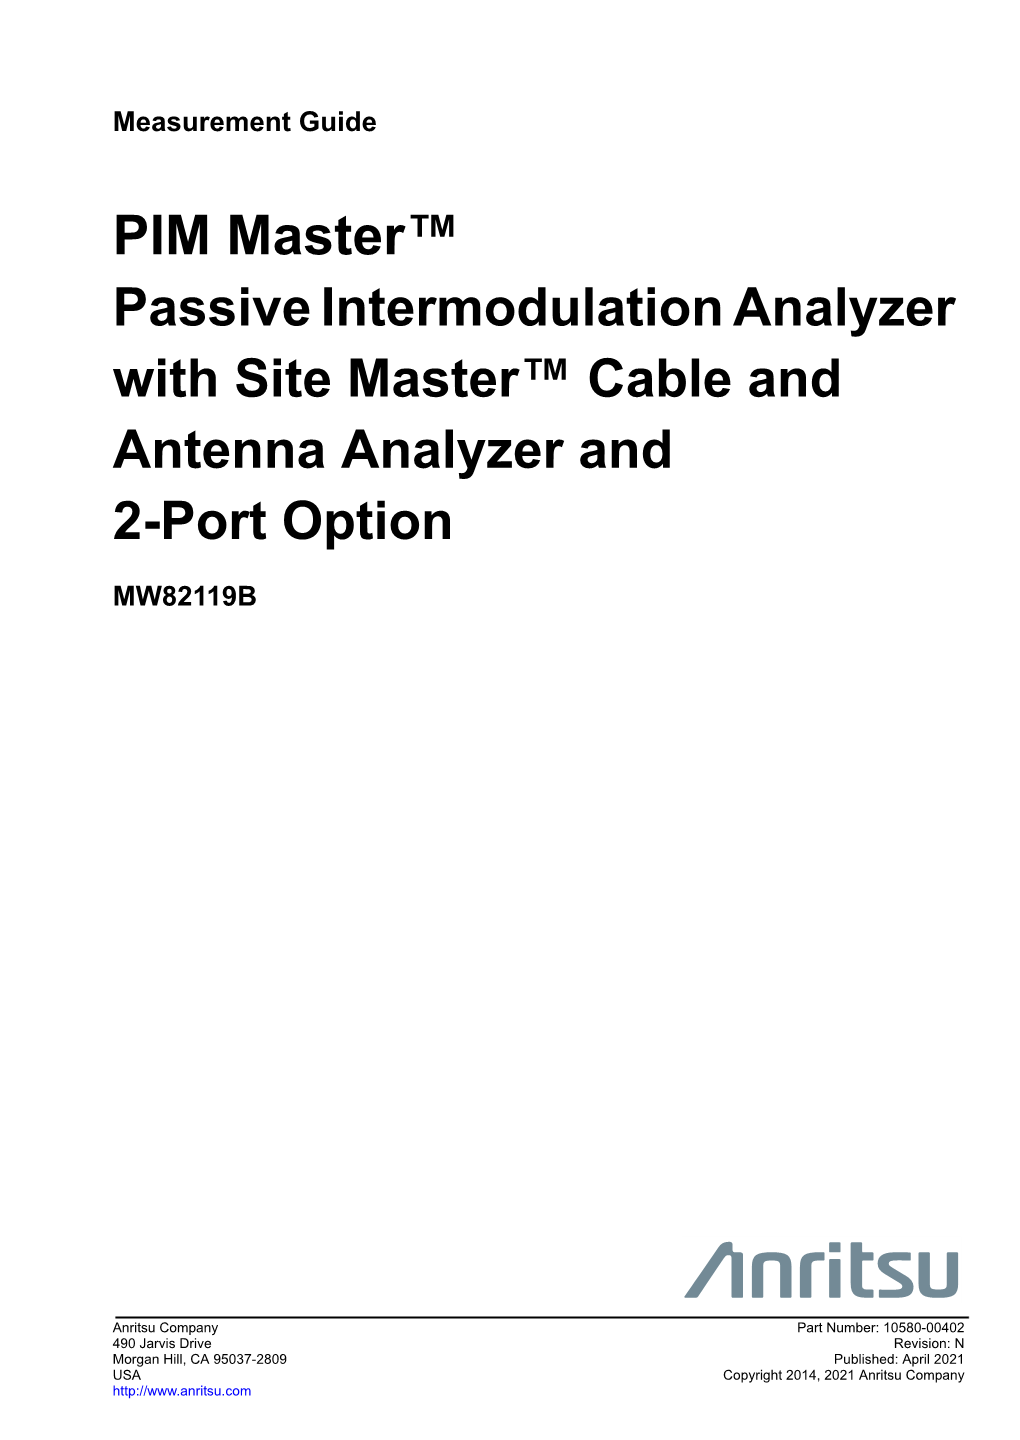 MW82119B PIM Master Measurement Guide